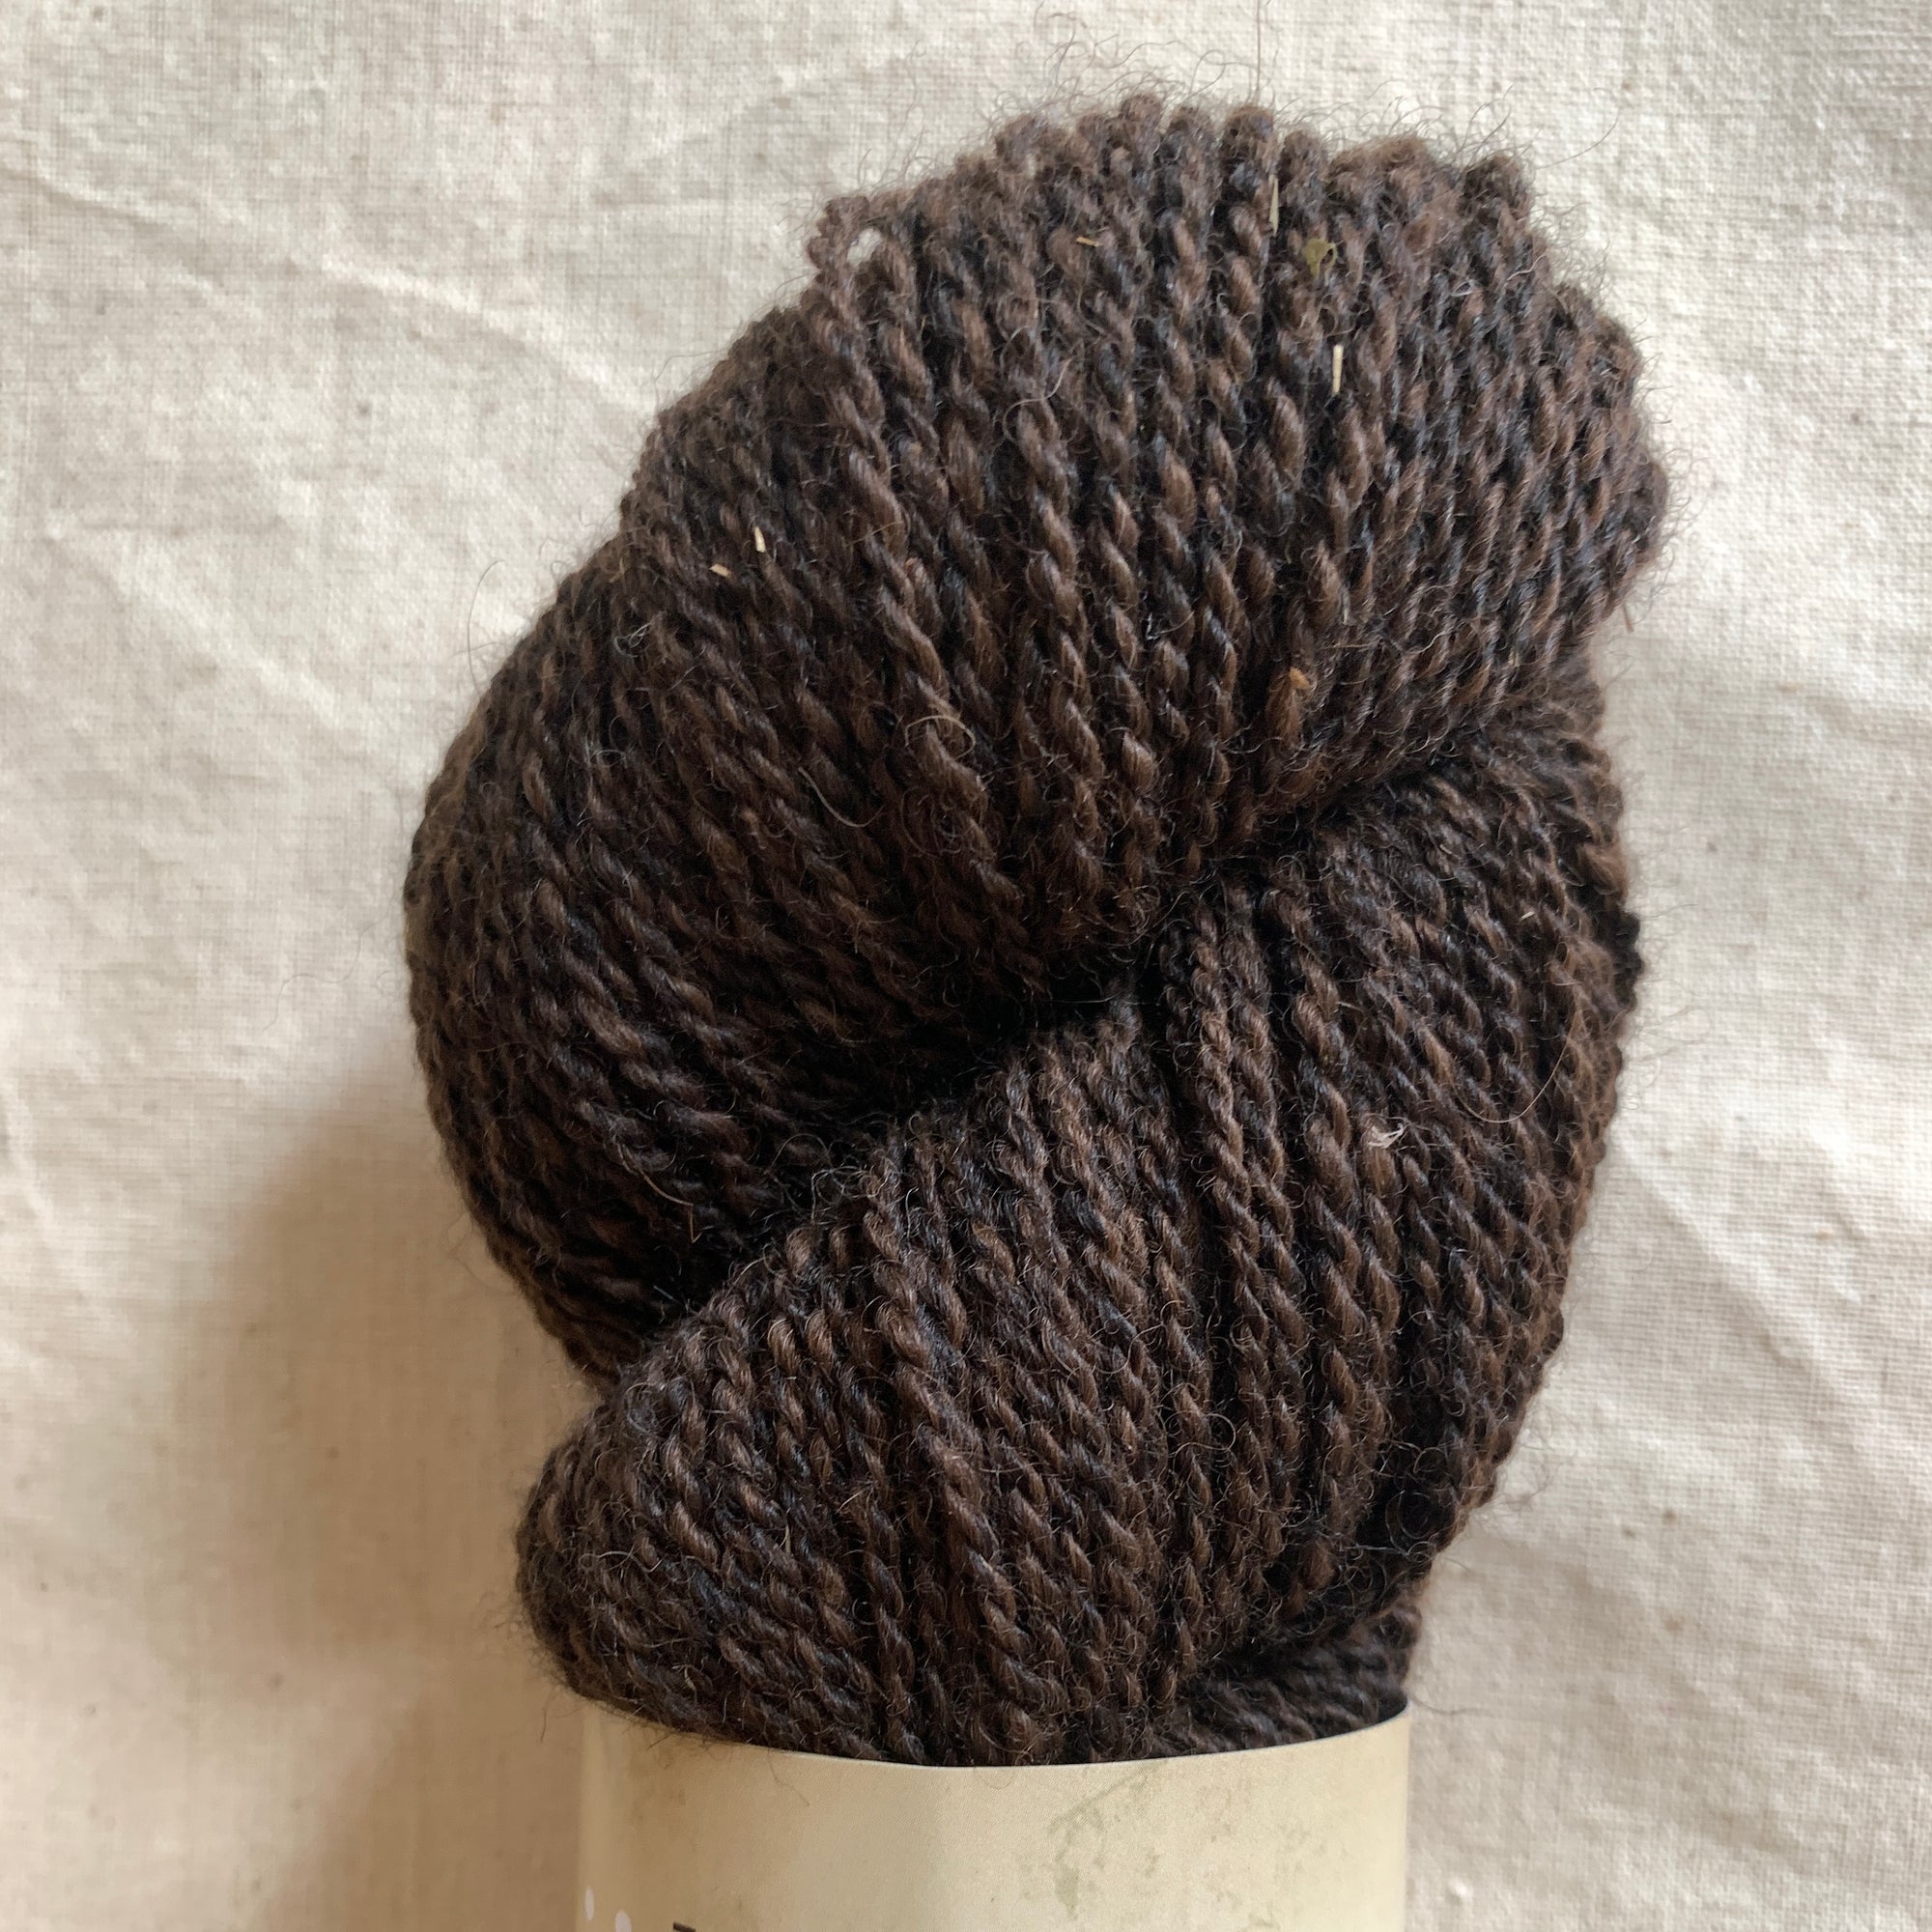 DK weight, soft baby alpaca yarn for hand knitting, crochet